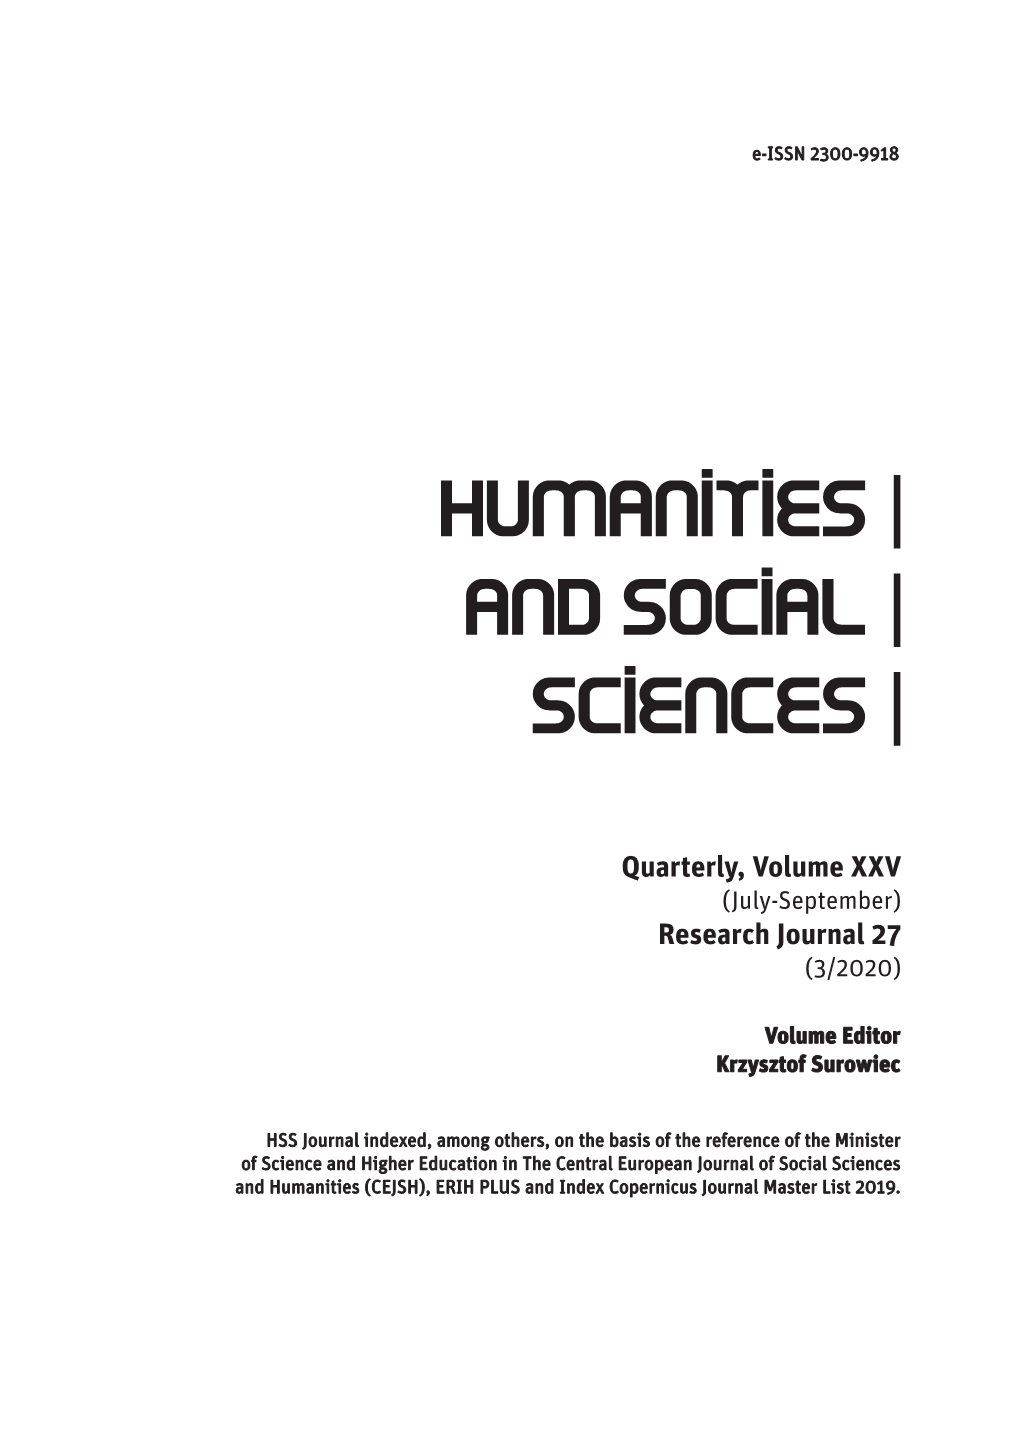 Quarterly, Volume XXV Research Journal 27